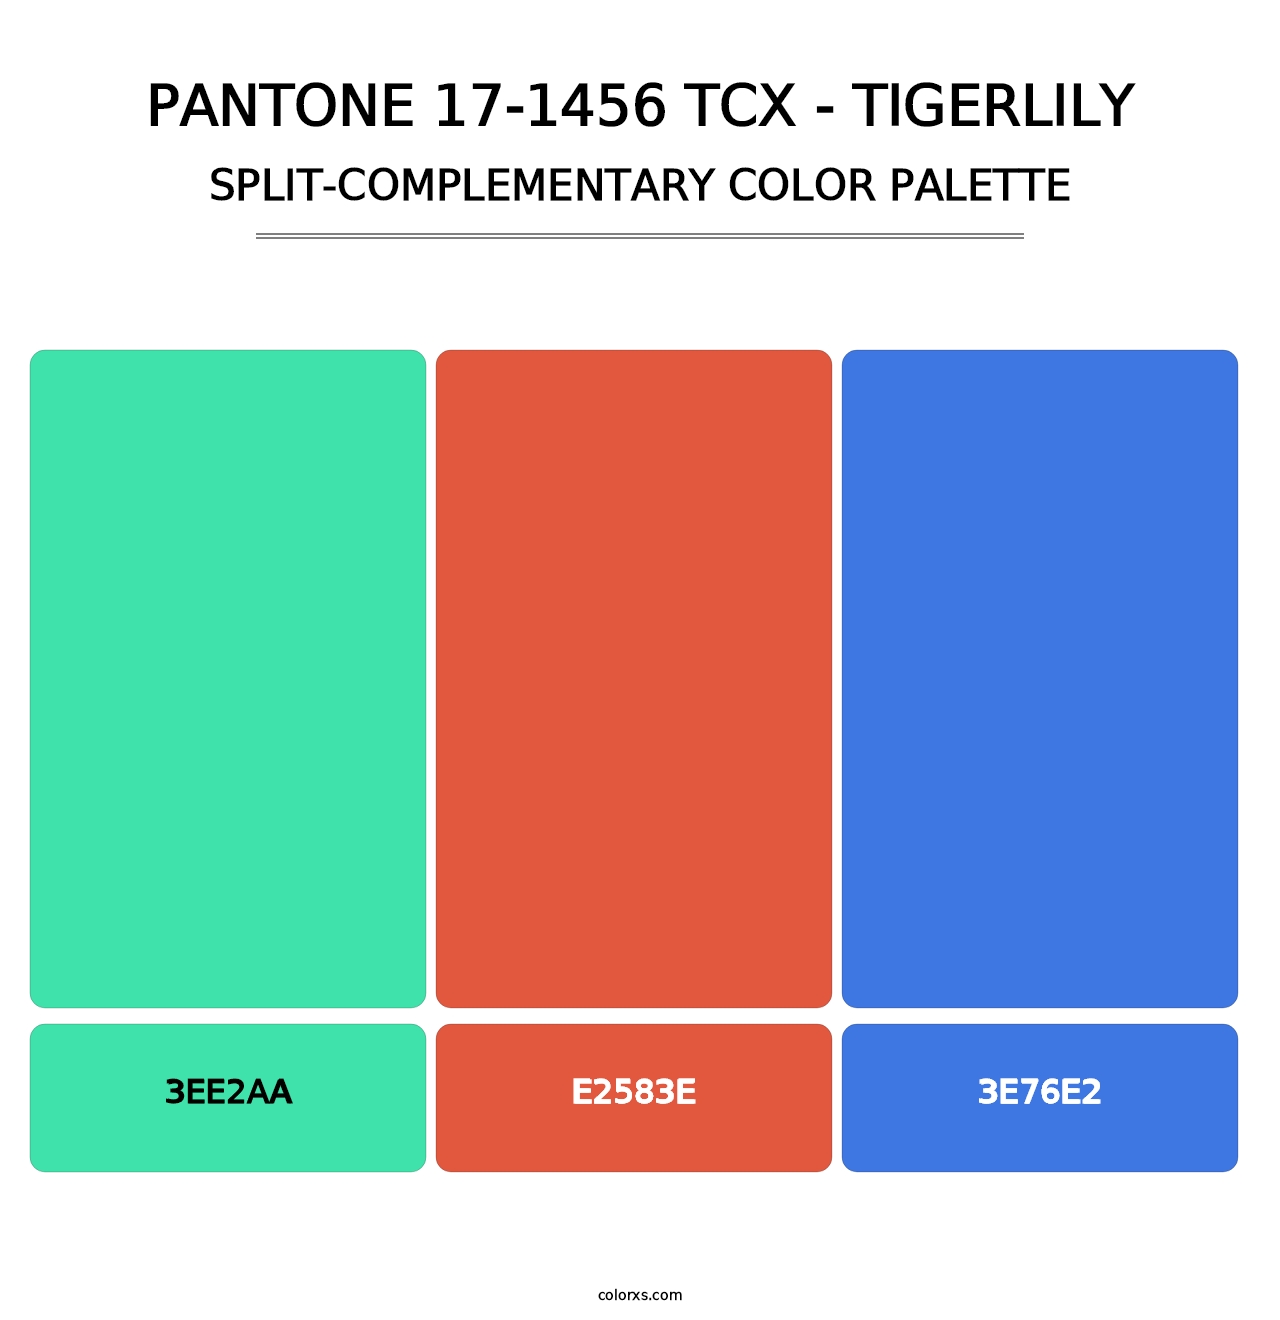 PANTONE 17-1456 TCX - Tigerlily - Split-Complementary Color Palette